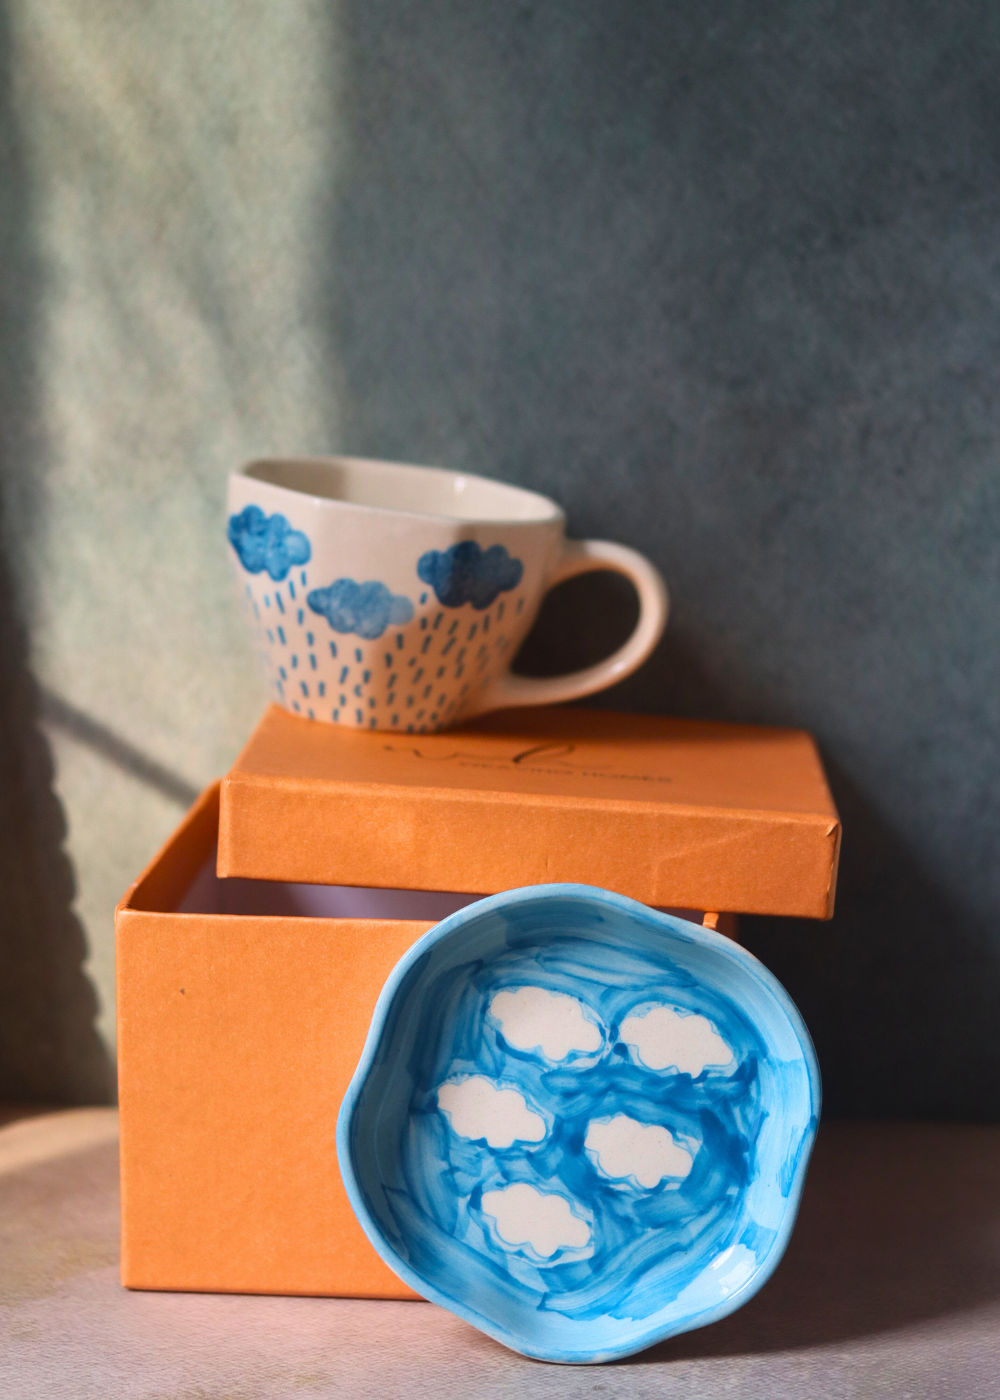 Stunning cloud coffee mug & dessert plate & gift boz